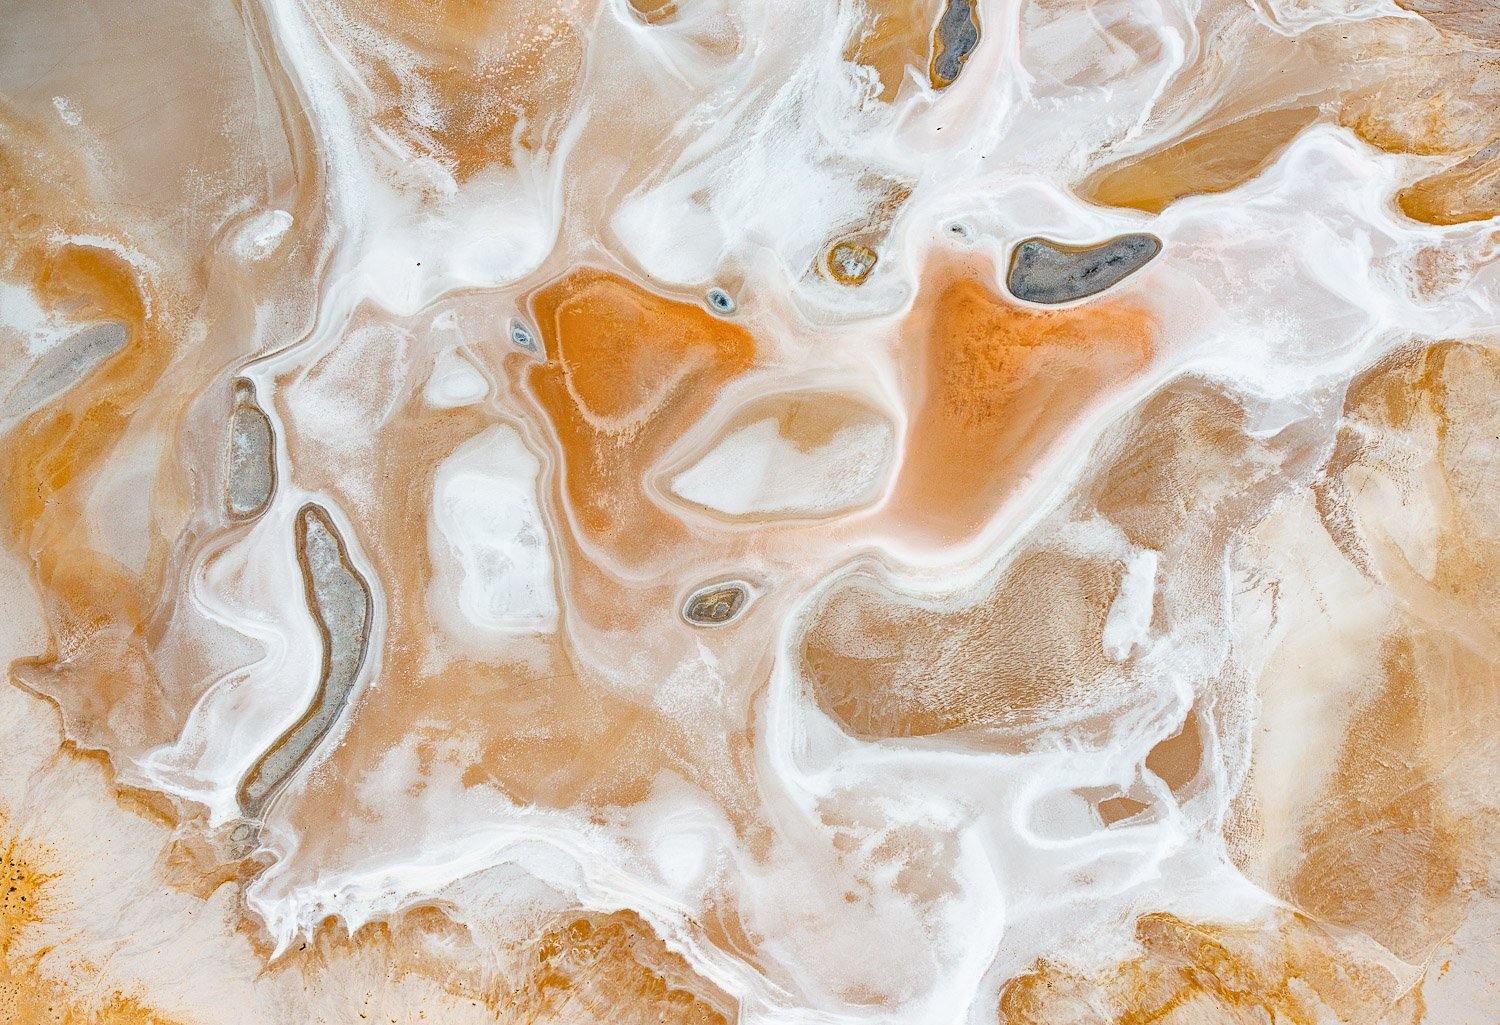 A random texture of a tea-like liquid with a milk-like liquid, with an amoeba-like cell in between, Blotched 